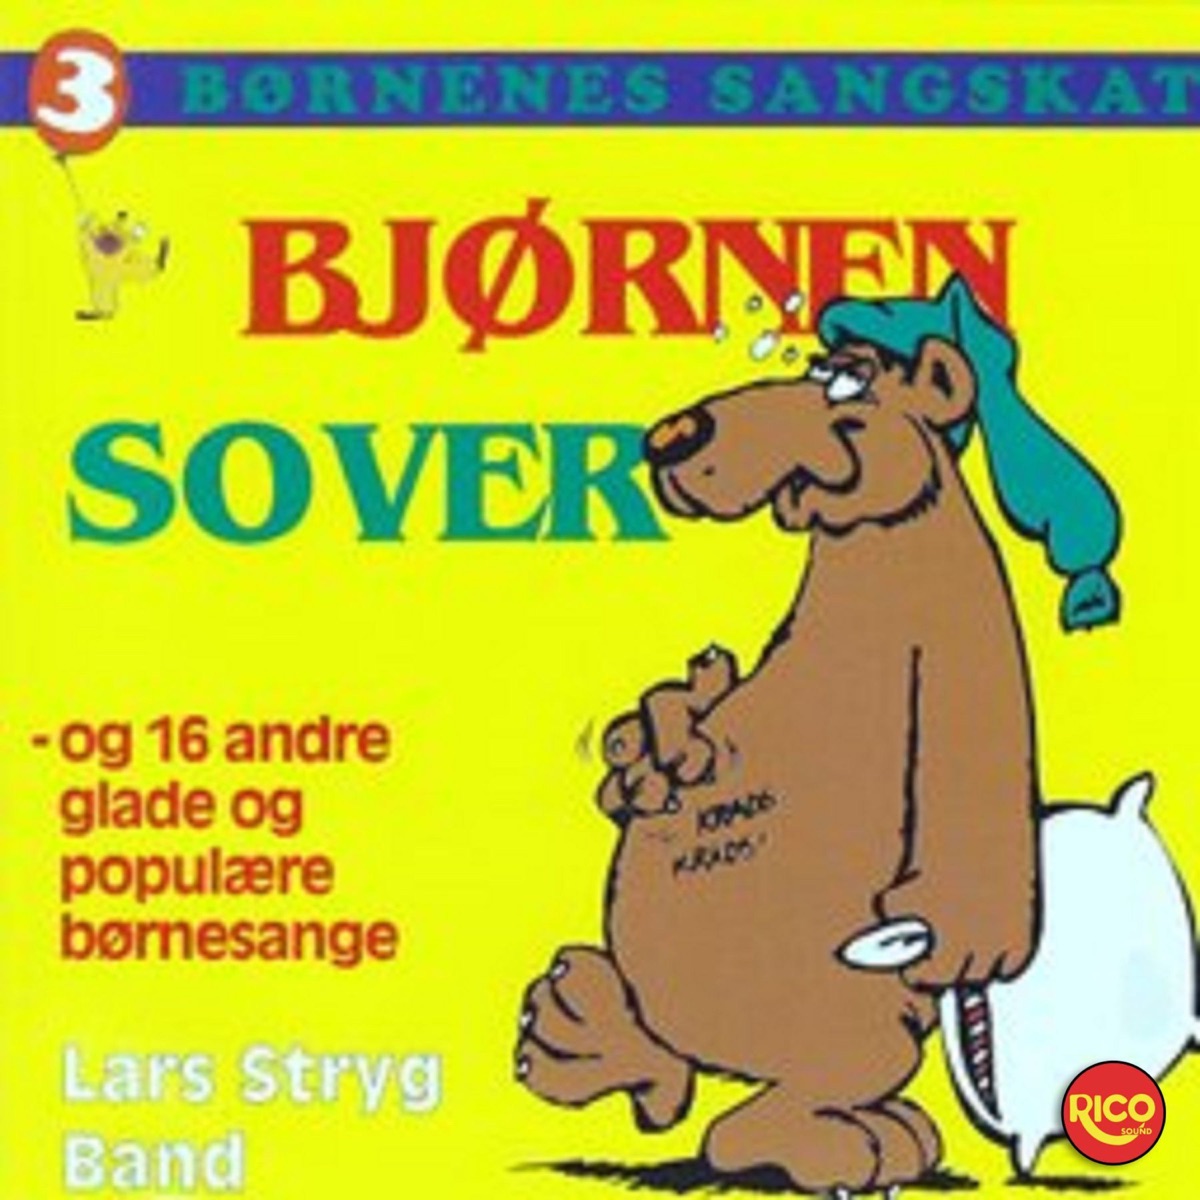 Børnenes sangskat, Vol. 1 - Mæ si'r det lille lam by Lars Stryg Band Apple Music